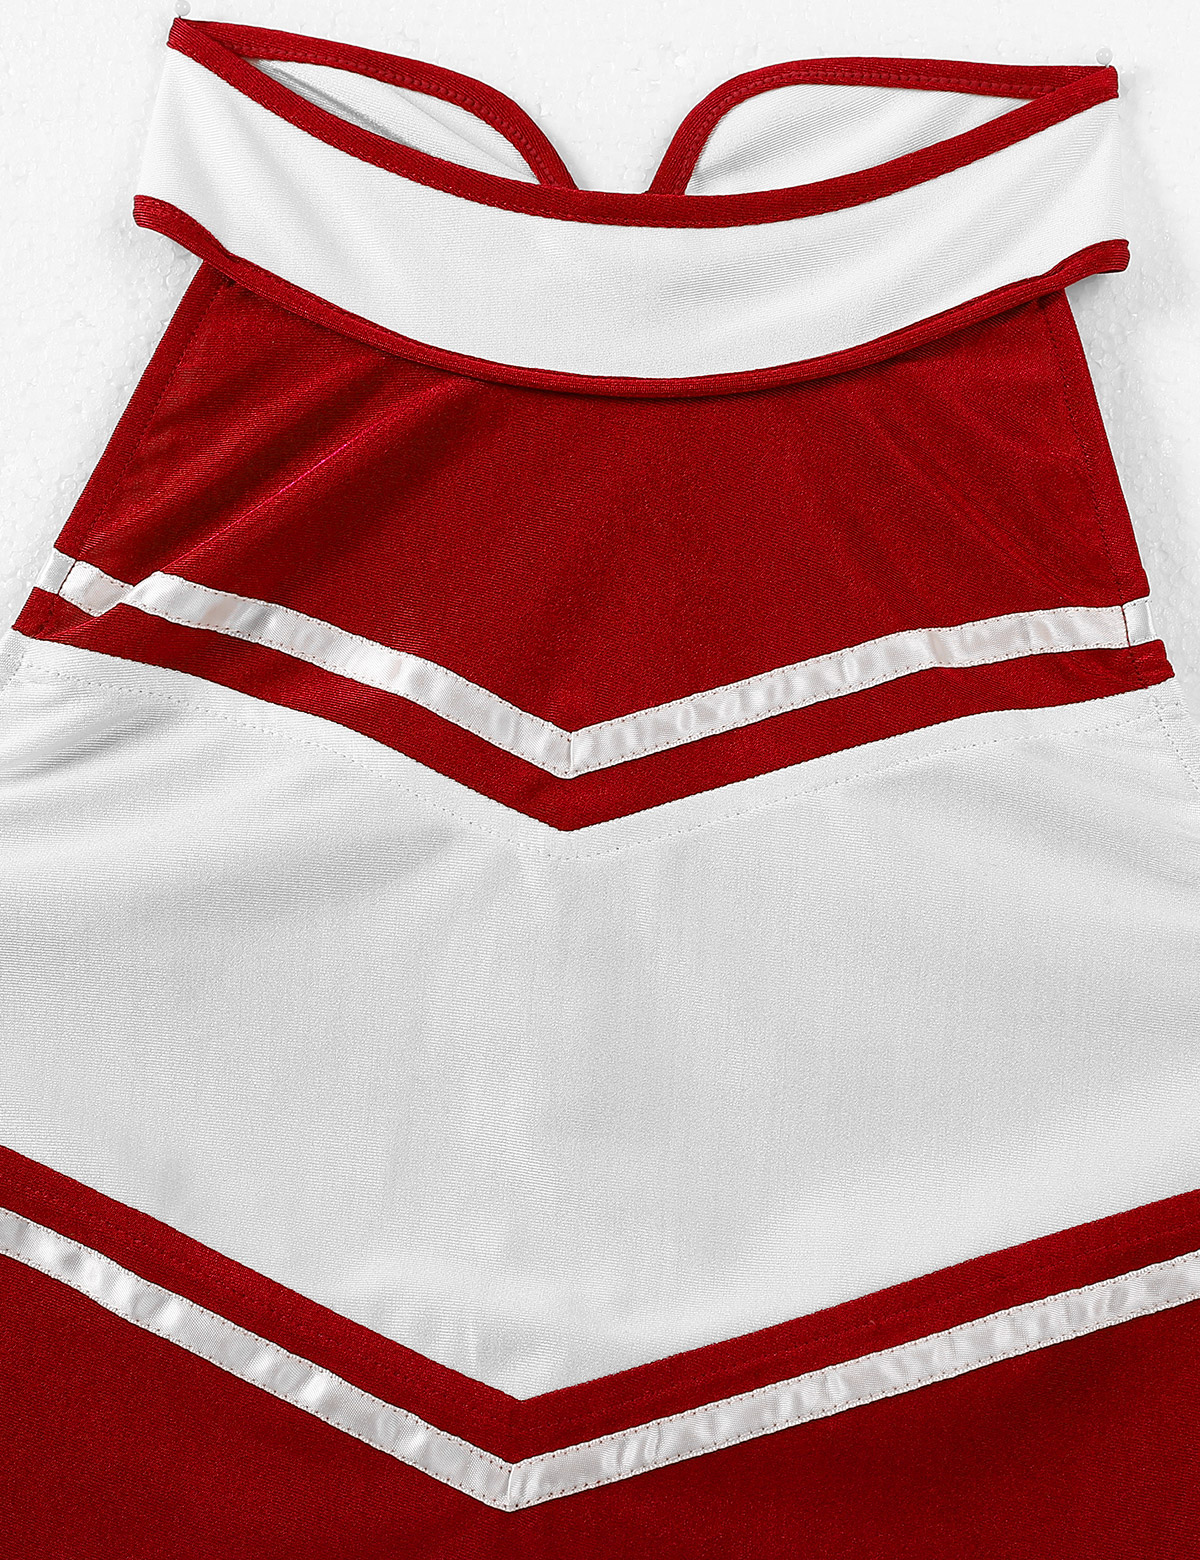 Womens Adult Charming Cheerleader Costume Uniform Sexy Clubwear Crop Top with Mini Pleated Skirt Lingerie Gleeing Schoolgirls